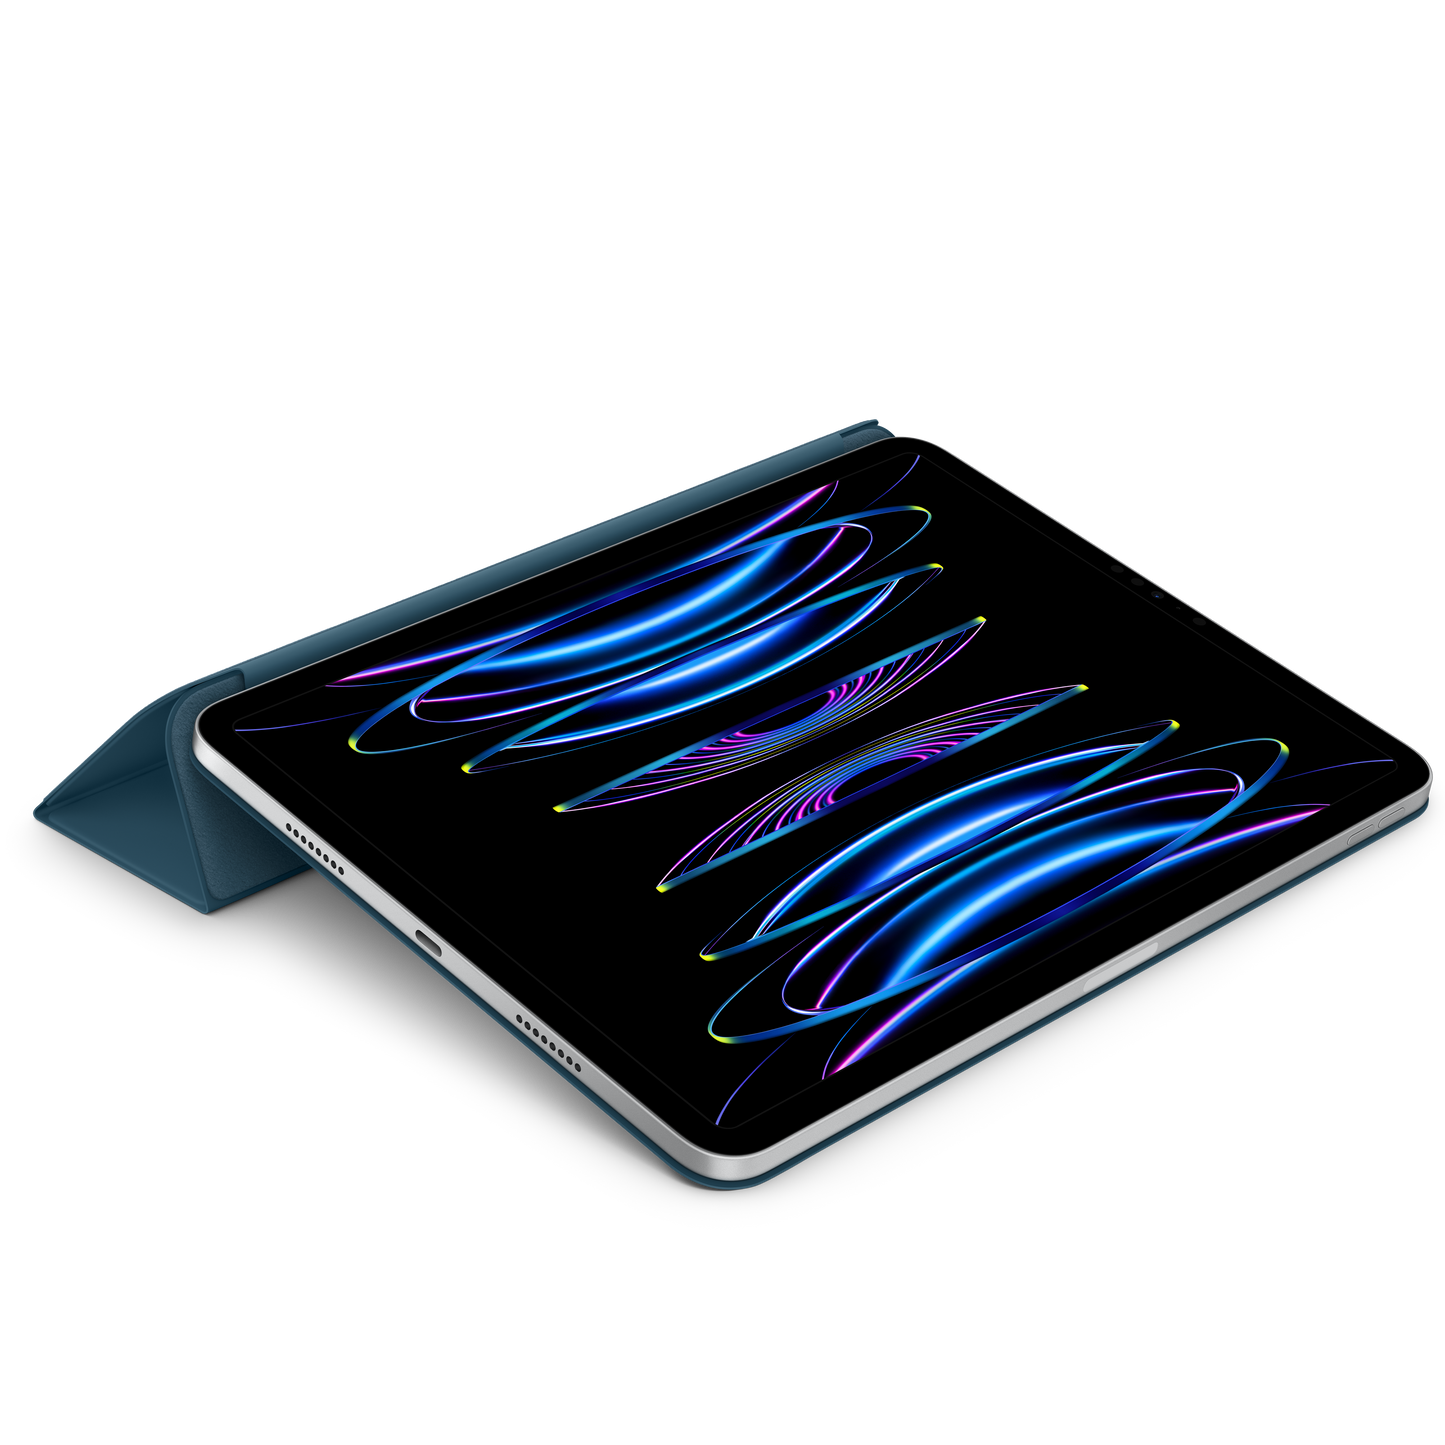 Smart Folio for iPad Pro 11-inch (4th generation) - Marine Blue